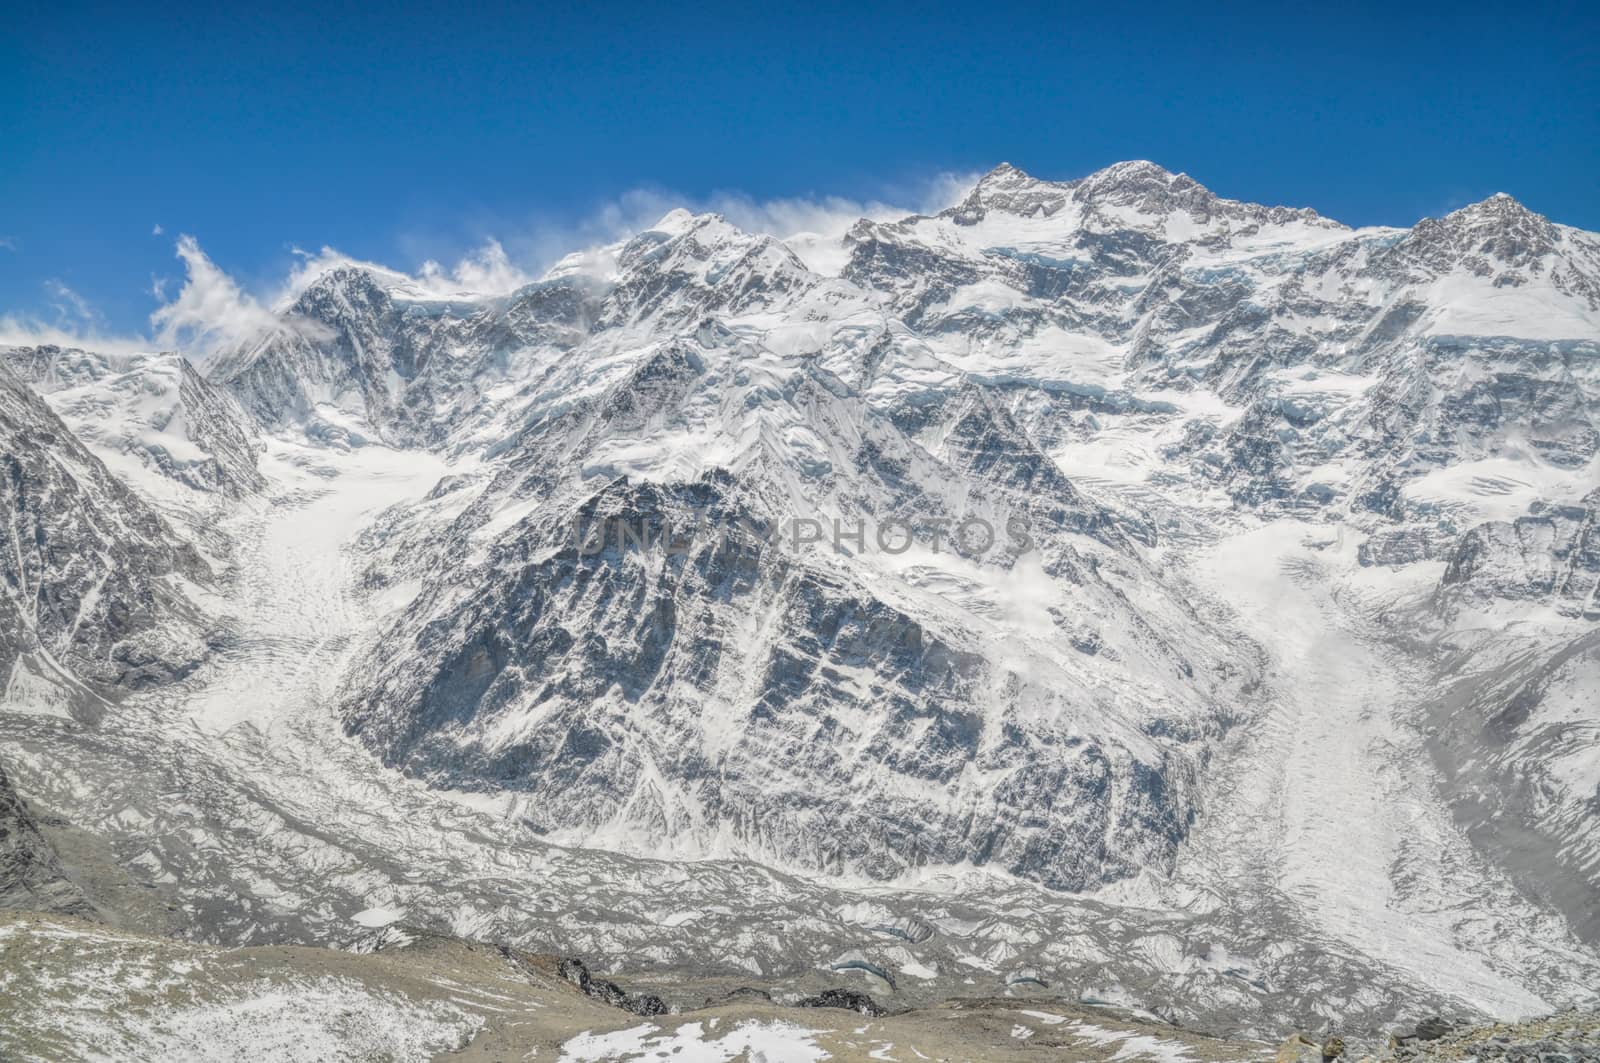 Scenic view of Kangchenjunga mountains in Nepal